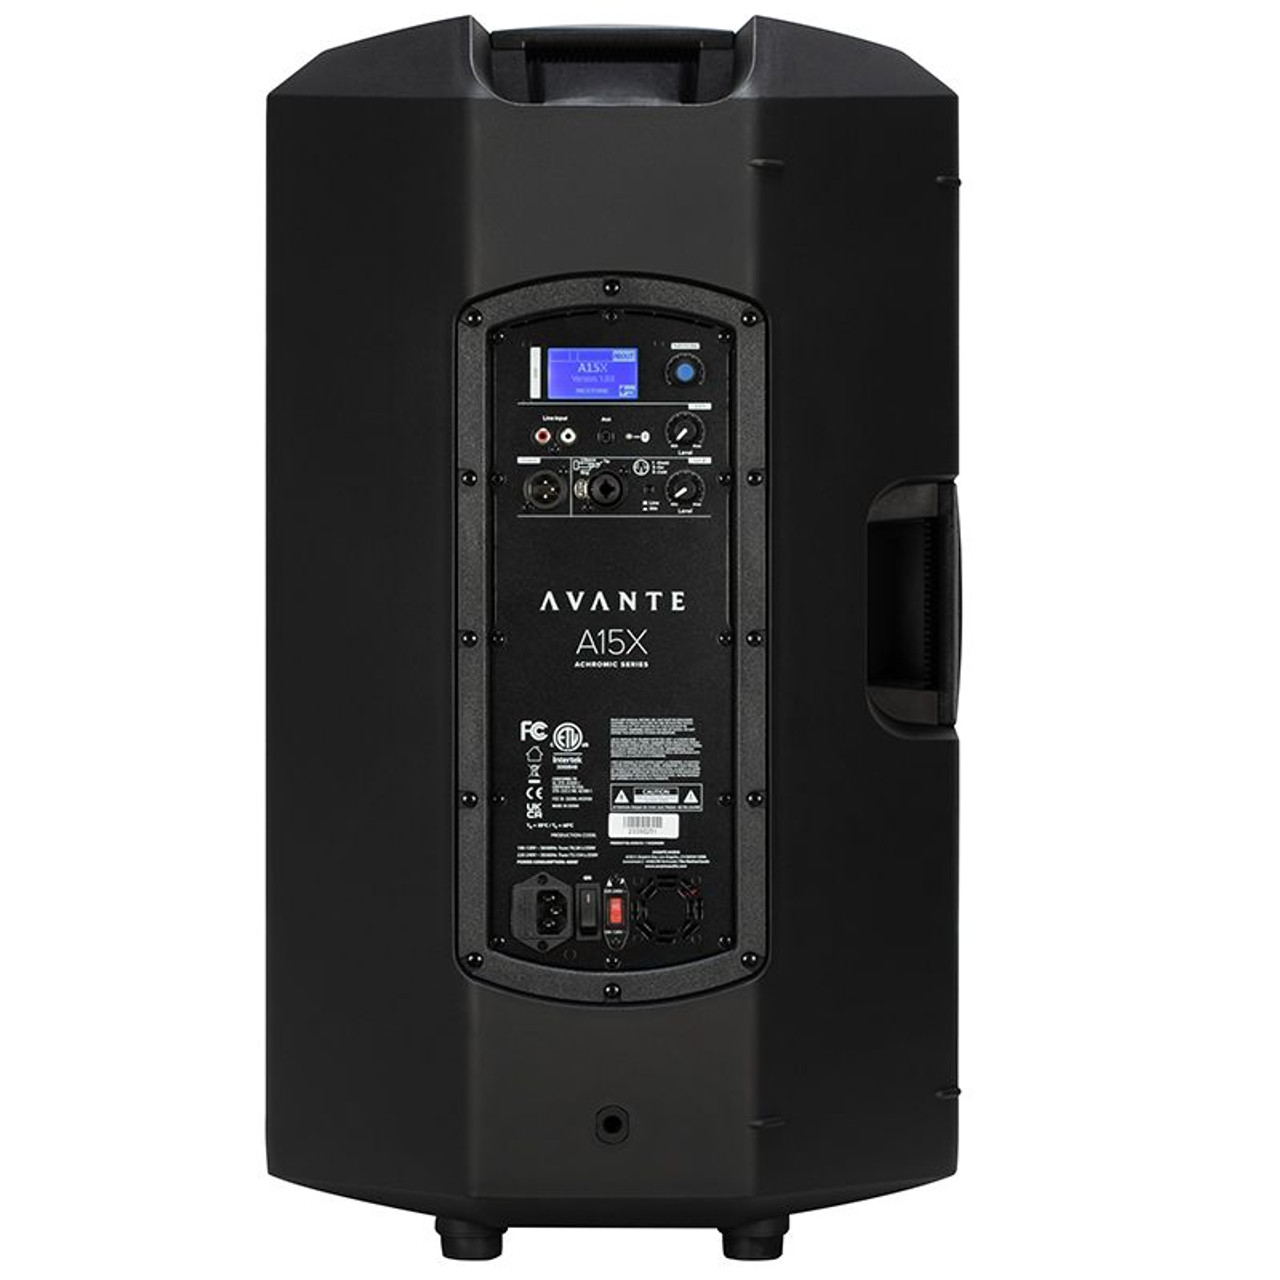 Avante Audio A15X 2-way Active Loudspeaker (A15X)